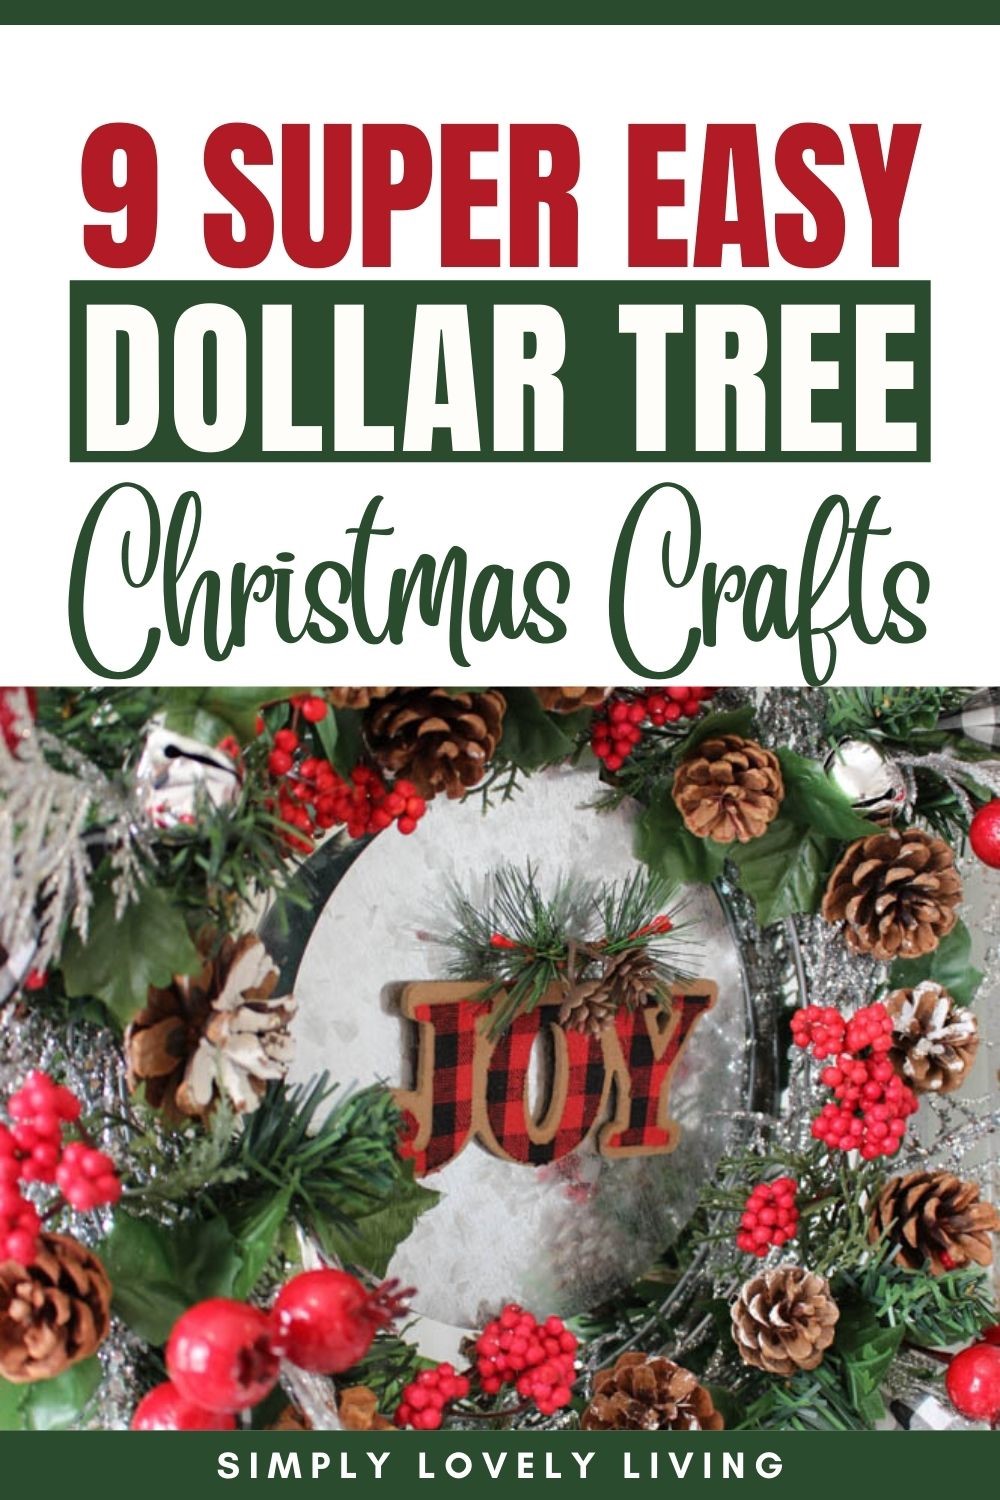 9 Super Easy DIY Dollar Tree Christmas Crafts